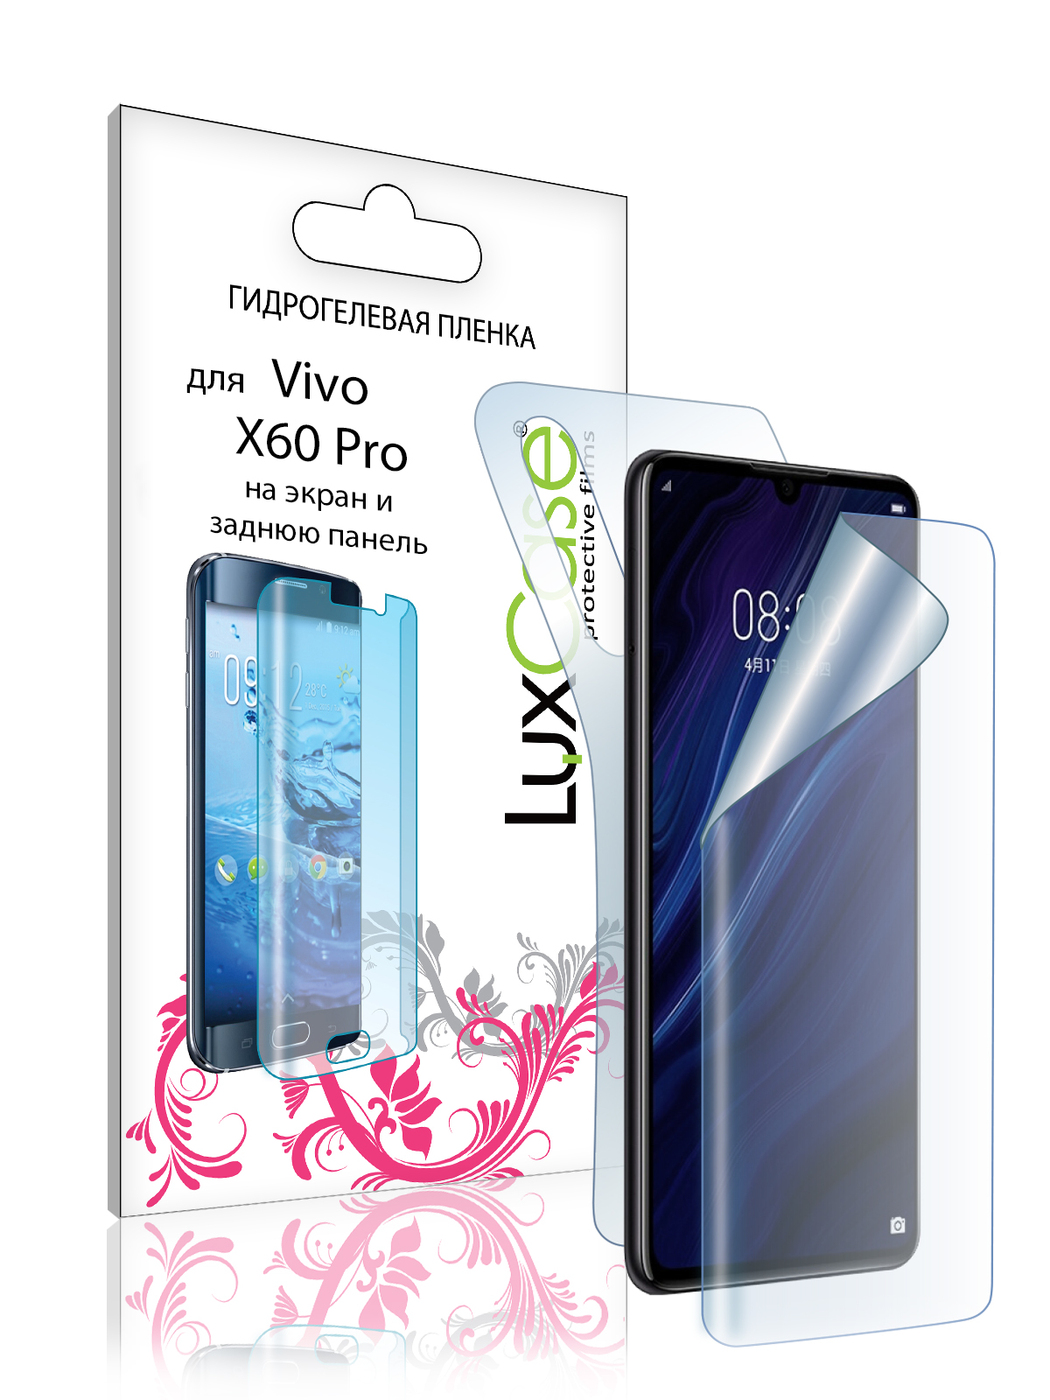 Пленка гидрогелевая LuxCase для Vivo X60 Pro Front and Back 0.14mm Transparent 86003 гидрогелевая пленка для vivo x60 pro plus виво x60 про плюс на весь экран с вырезом под камеру защитная противоударная пленка